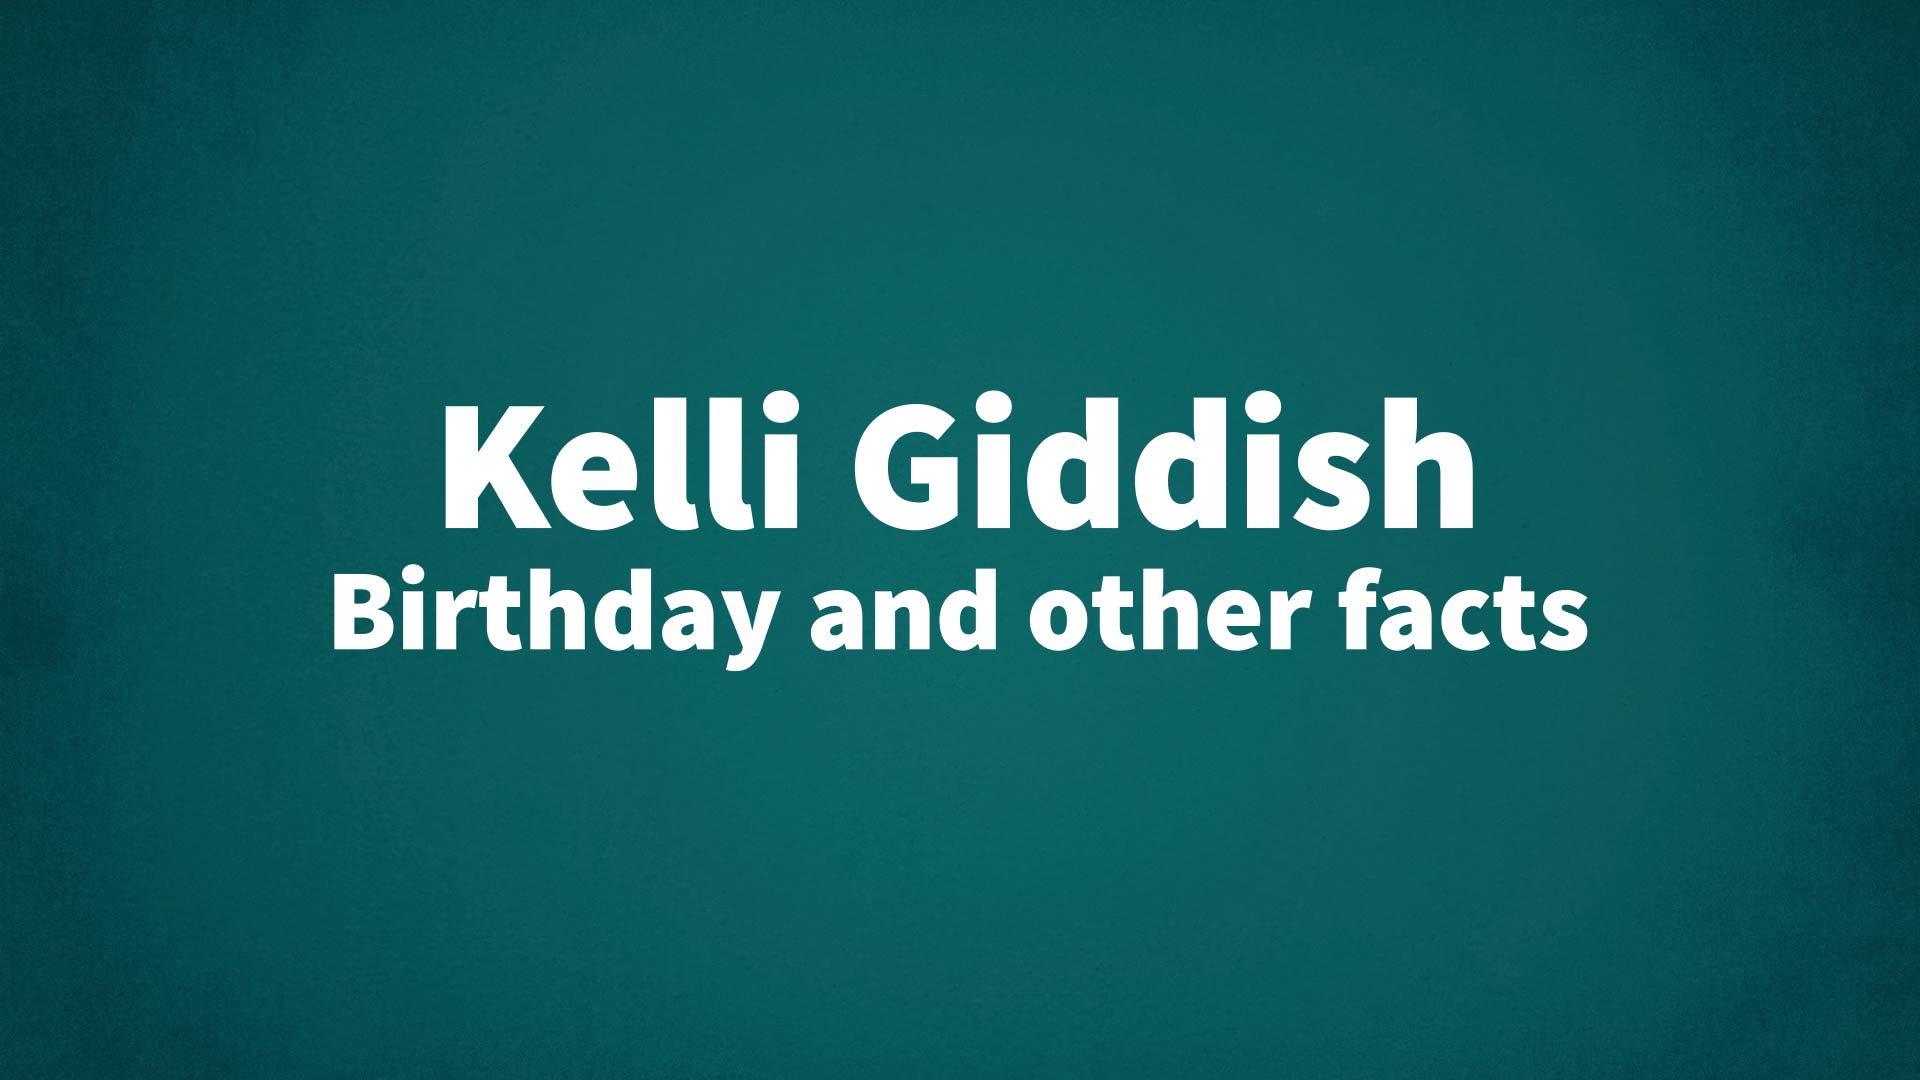 title image for Kelli Giddish birthday